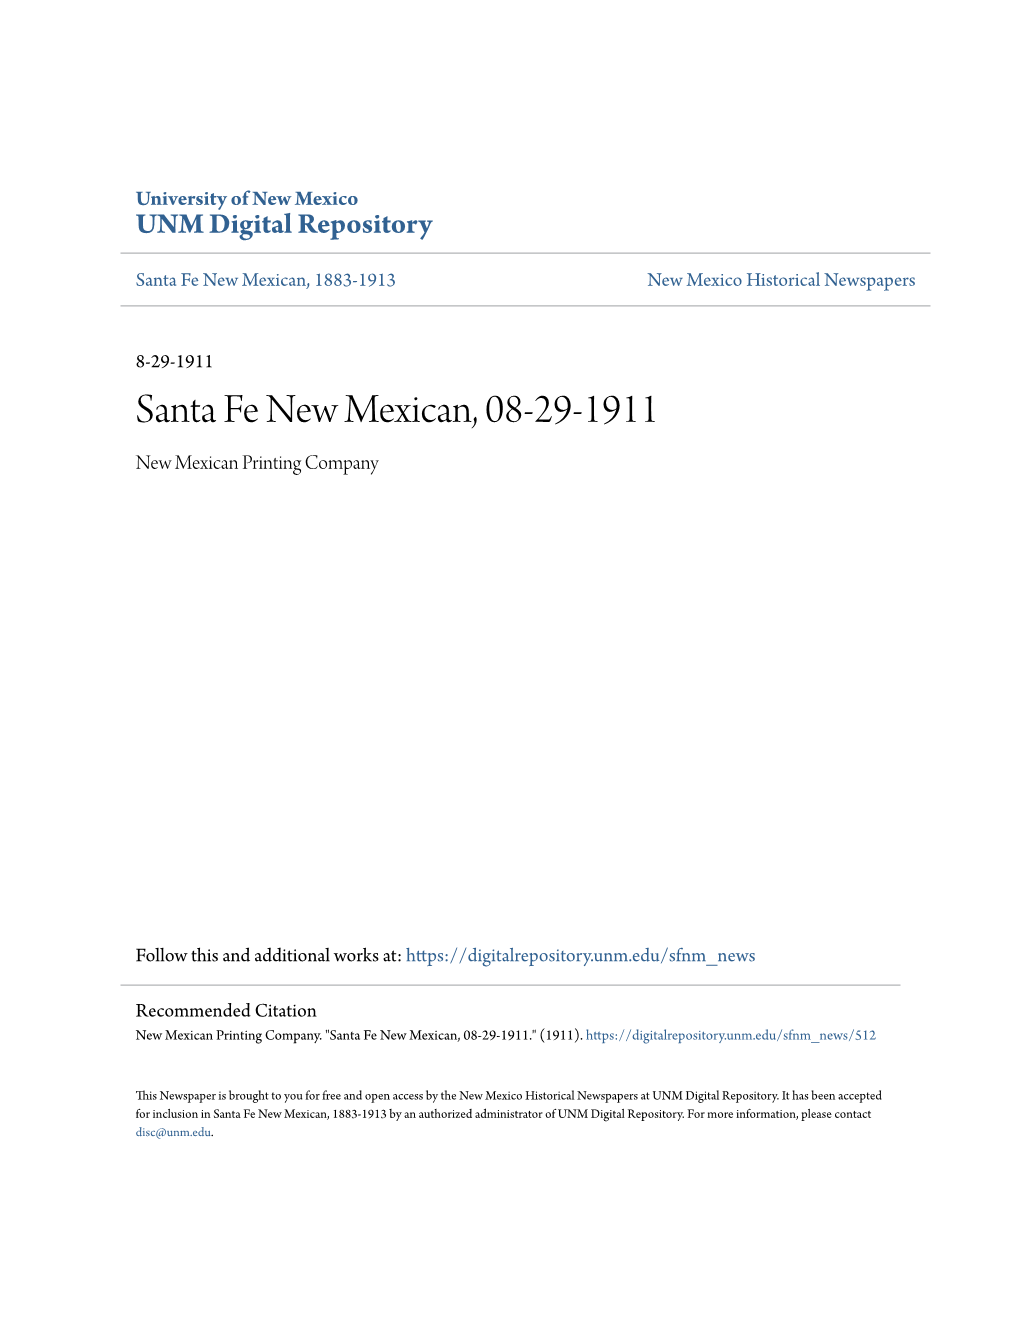 Santa Fe New Mexican, 08-29-1911 New Mexican Printing Company